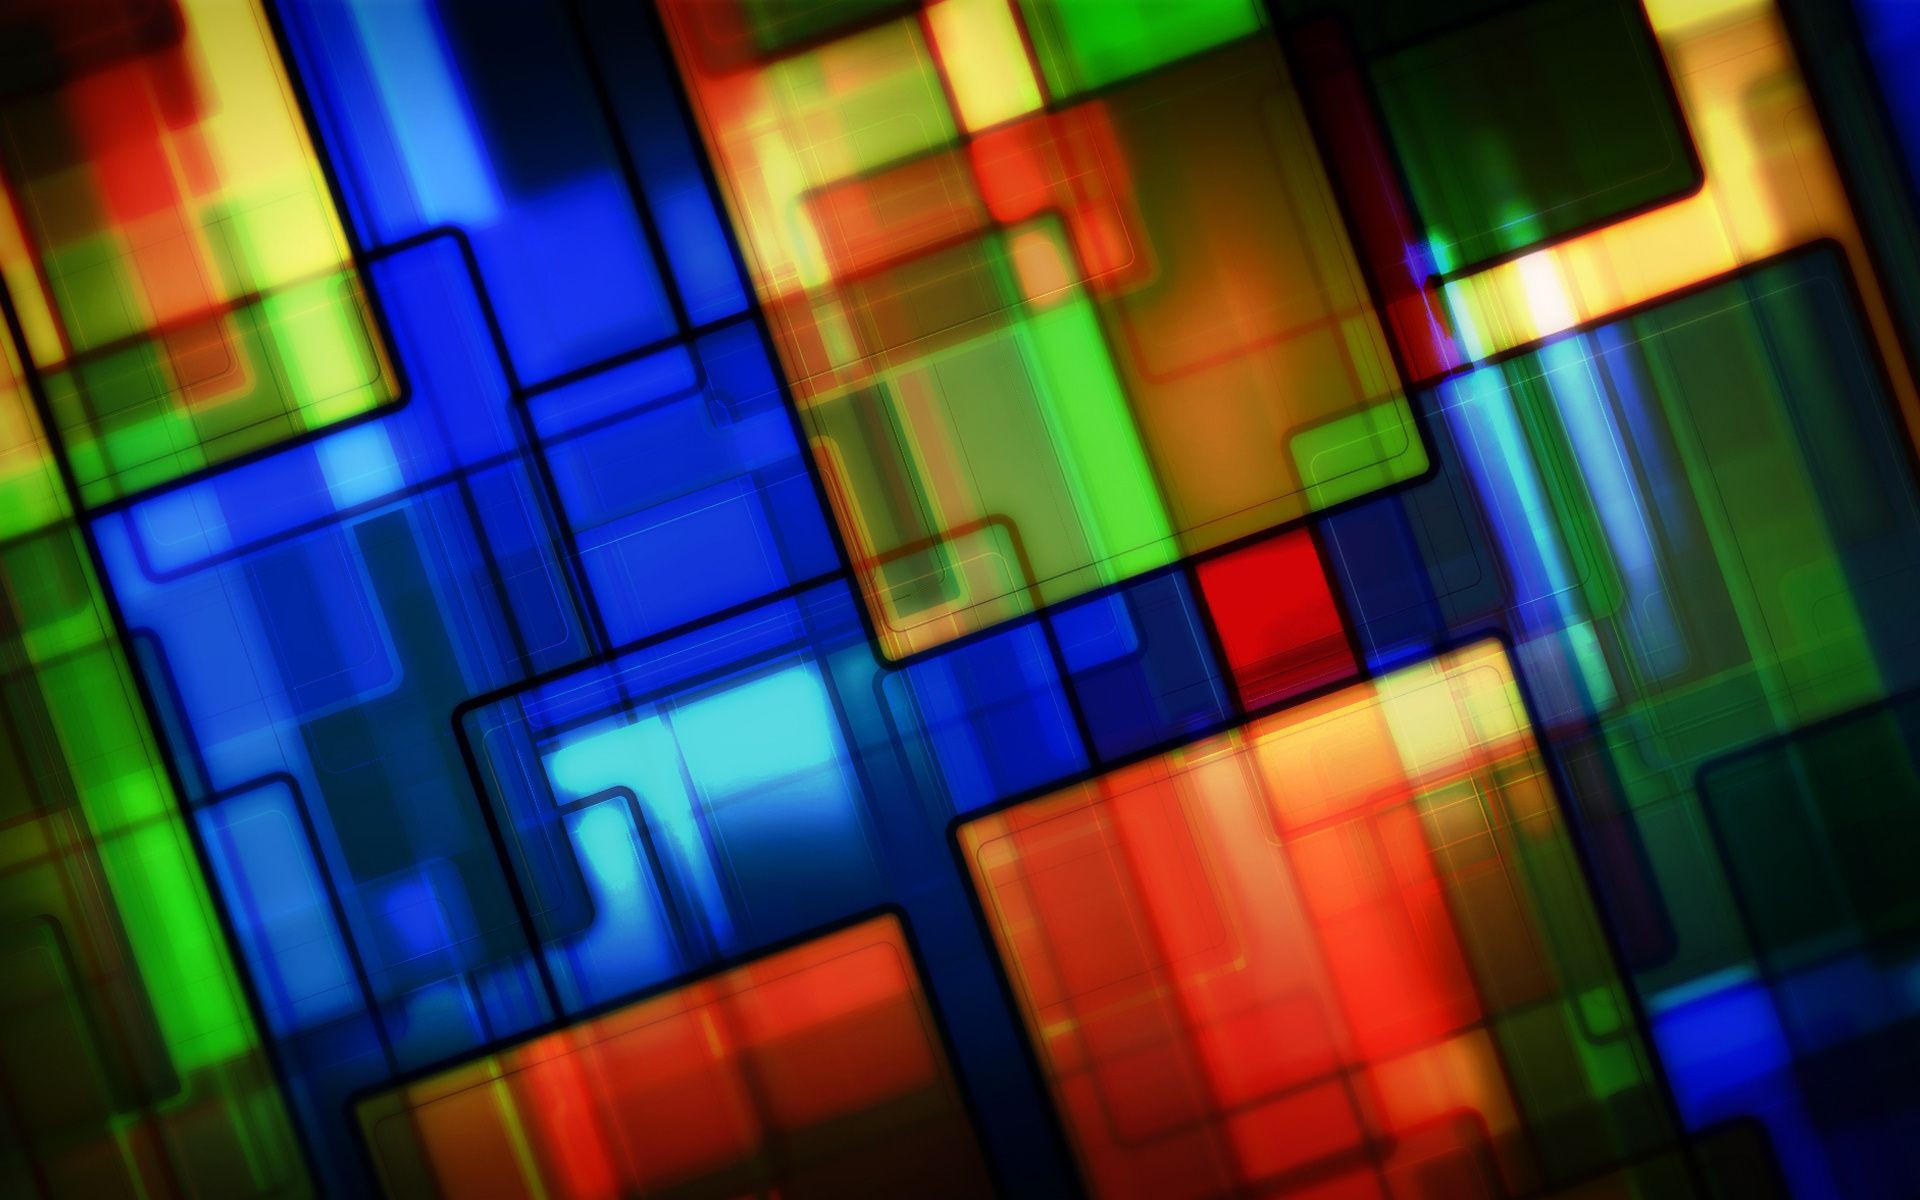 geometric shapes abstract color art design bright motley graphic texture rainbow blur futuristic shape modern pattern wallpaper artistic illustration desktop light background